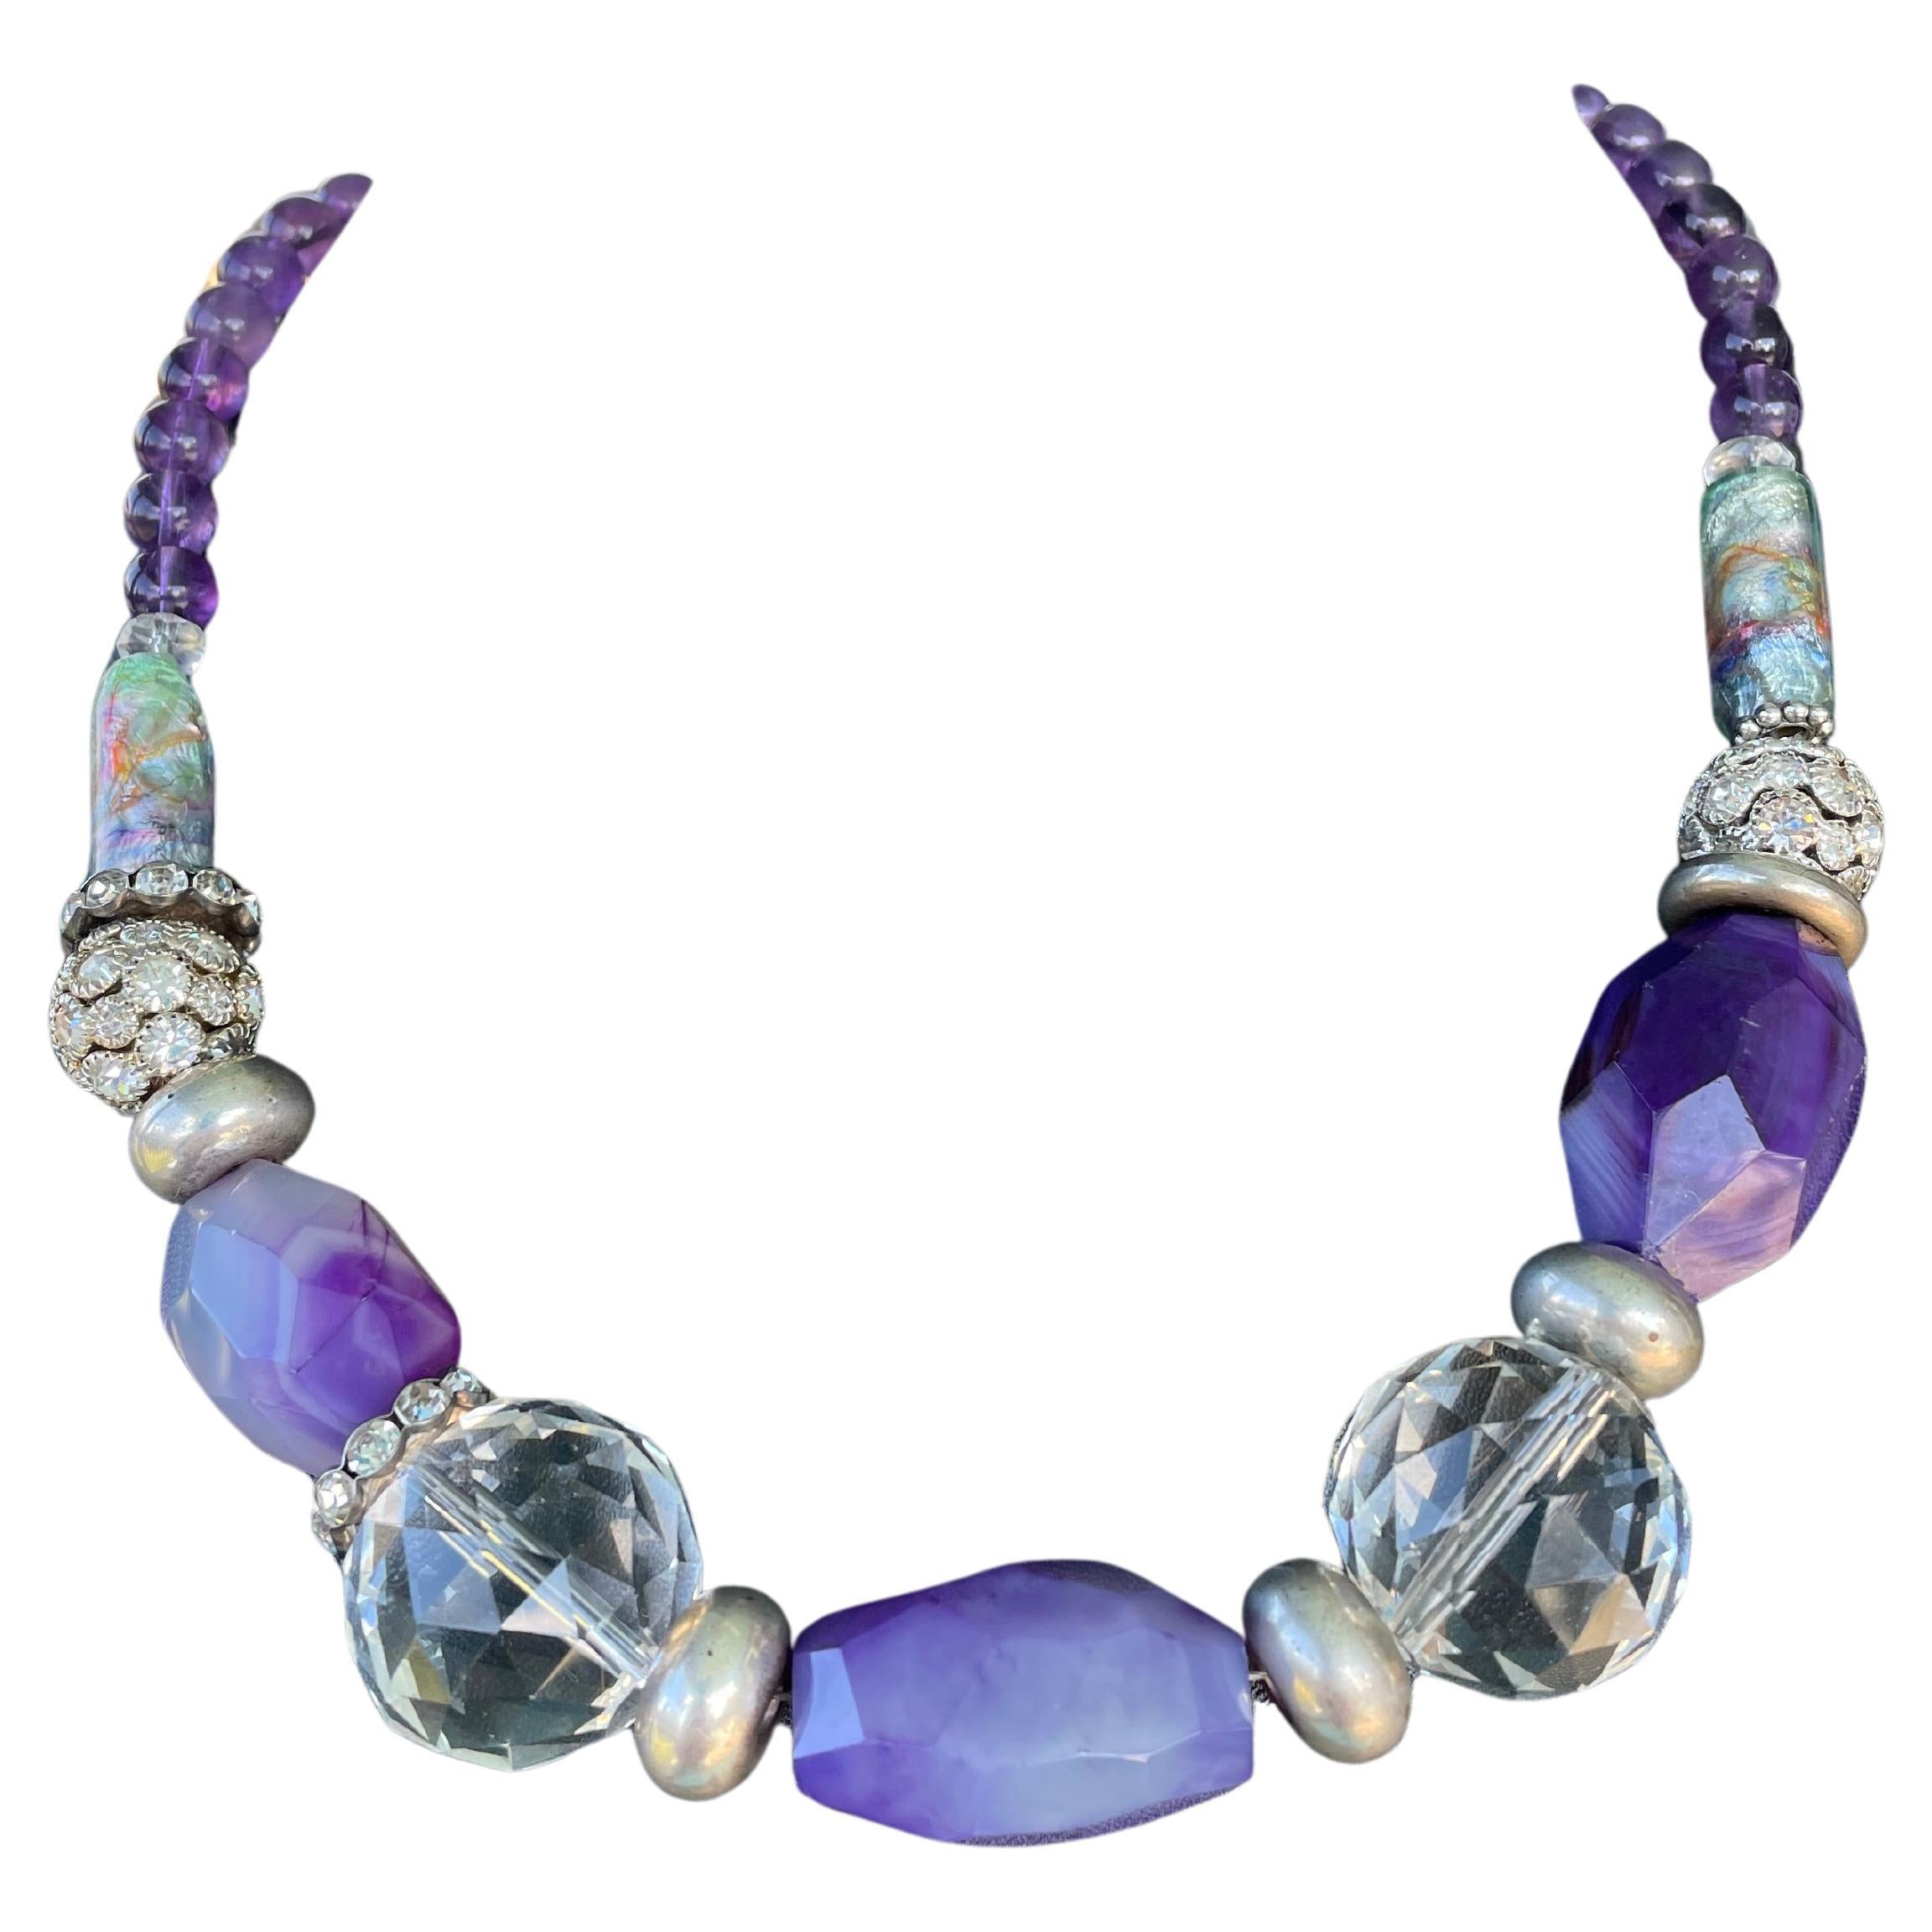 LB bietet Achat Amethyst Bergkristall Sterlingsilber OOAK einzigartige Halskette